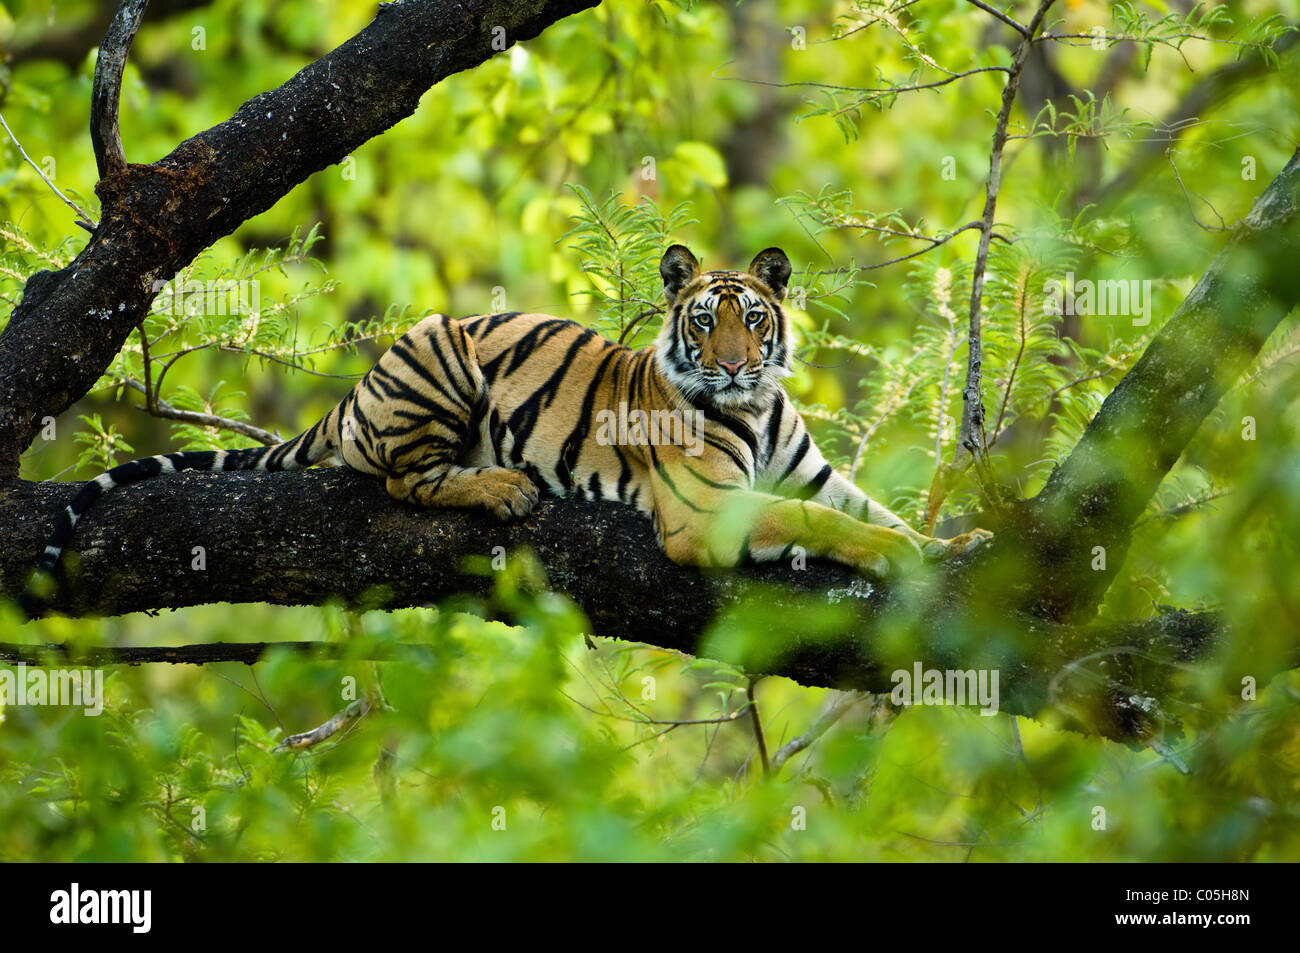 Adolescente varón Tigre de Bengala (aproximadamente 15 meses) descansando arriba de un árbol. Bandhavgarh NP, Madhya Pradesh, India. Foto de stock